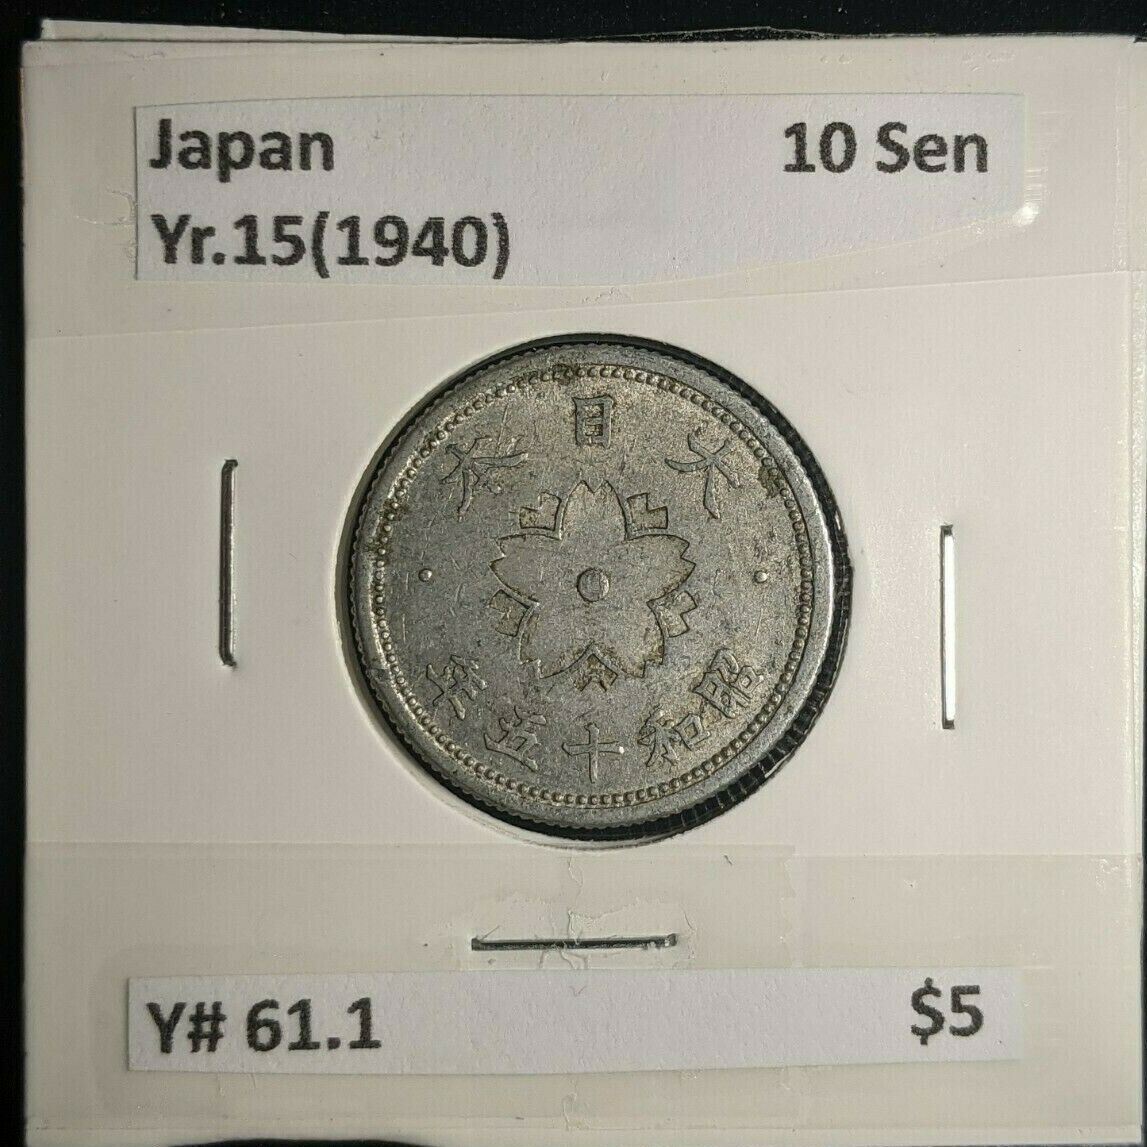 Japan Yr.15(1940) 10 Sen Y# 61.1 #036